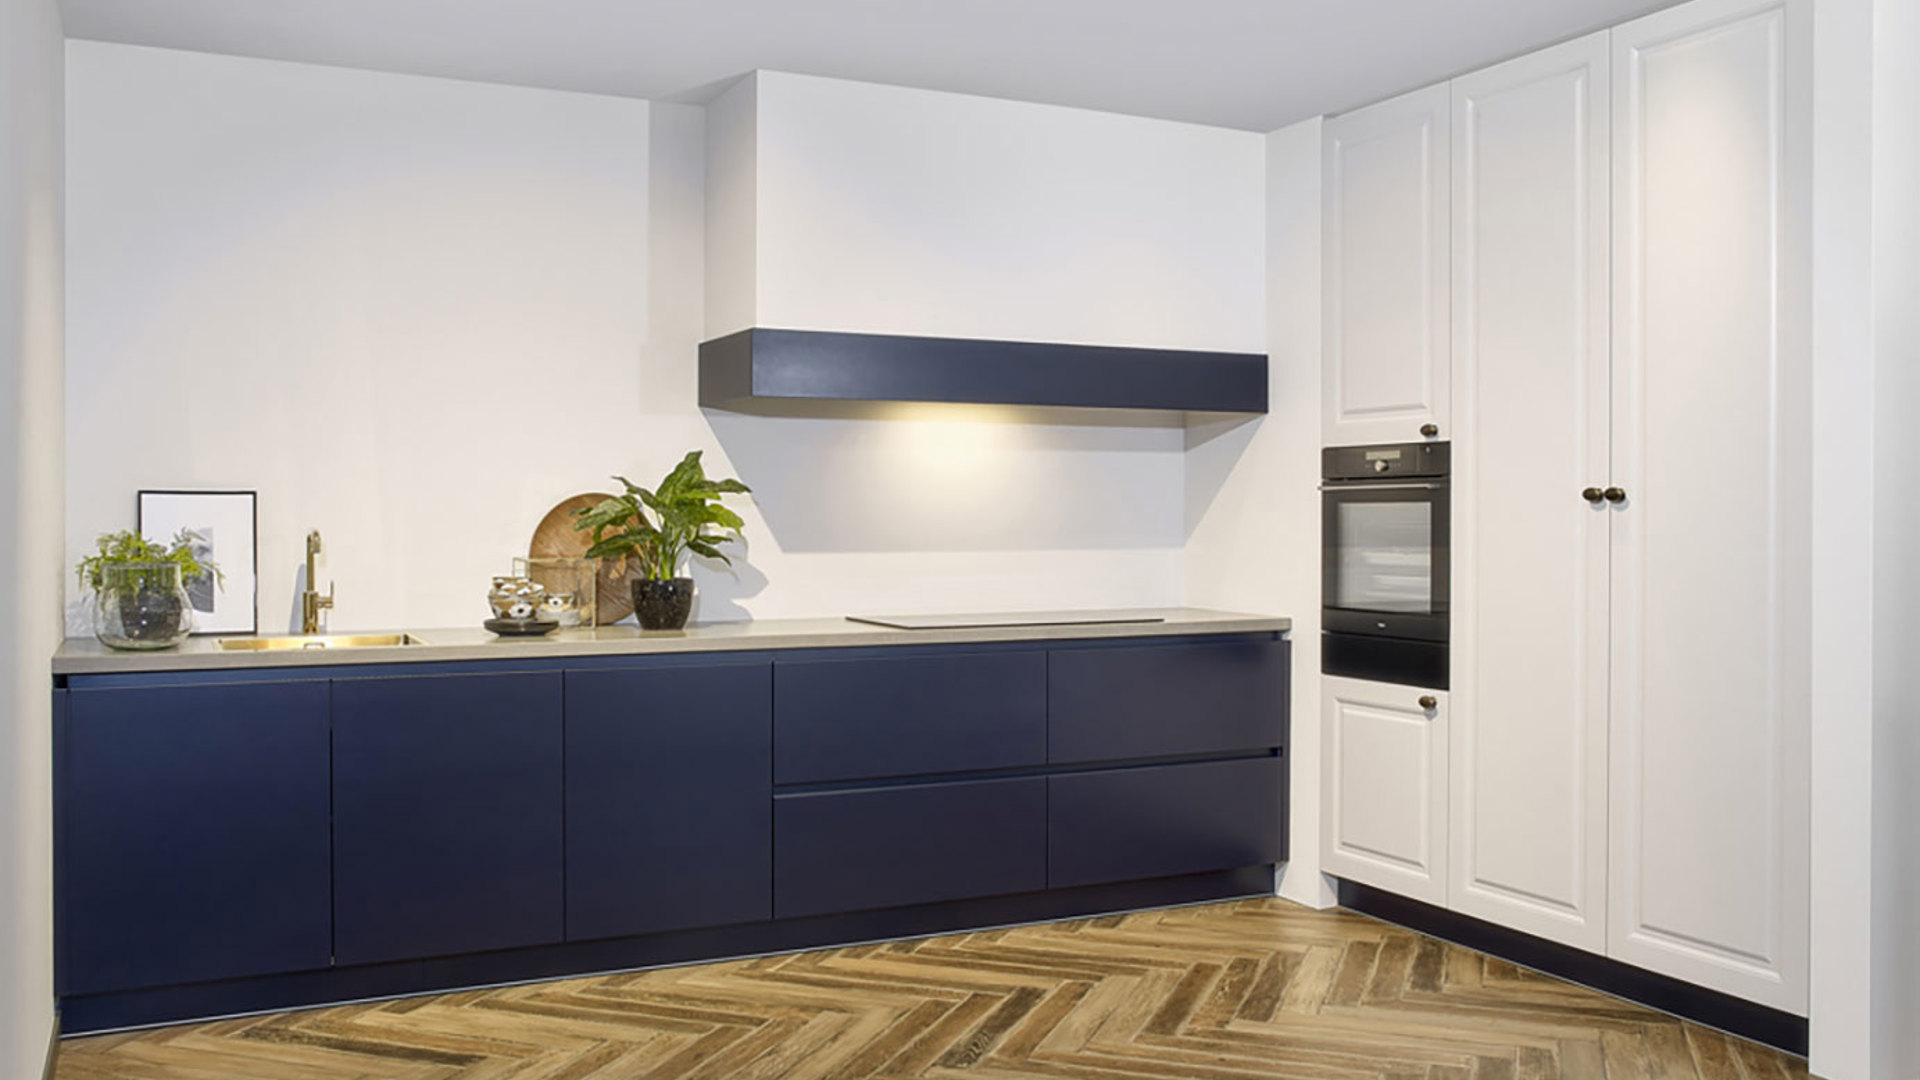 Modern blauwe keuken met witte kastenwand